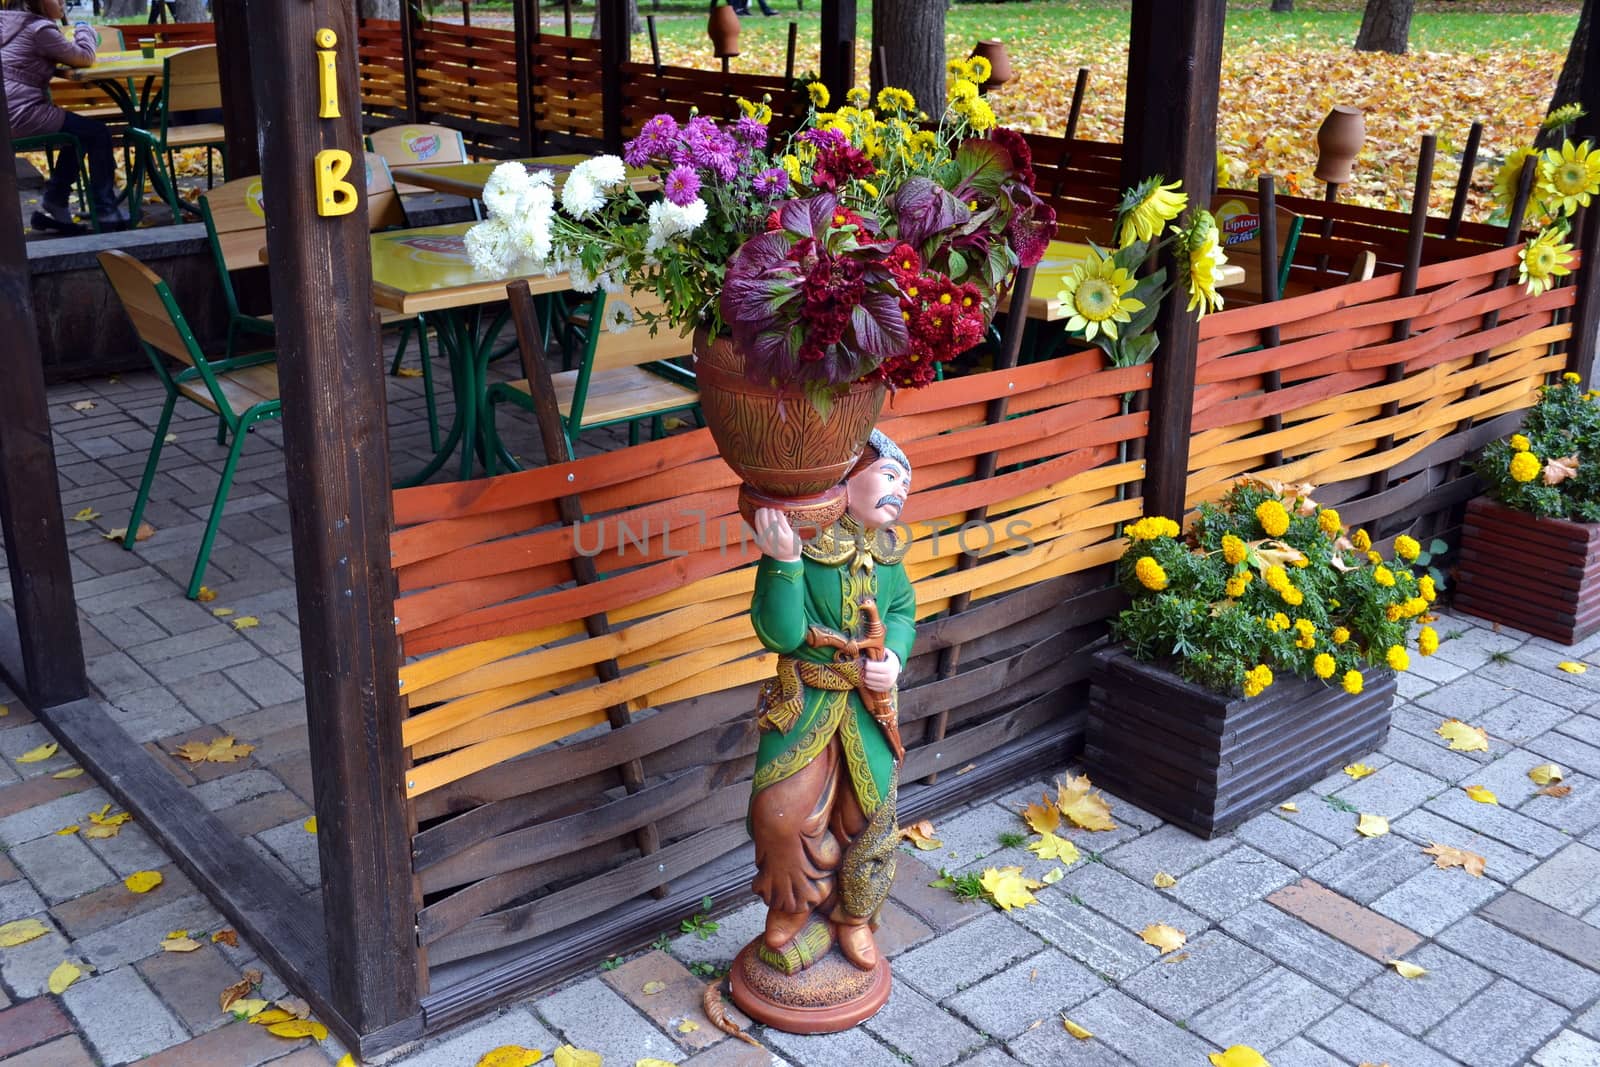 The Ukrainian Kozak's figurine with flowers